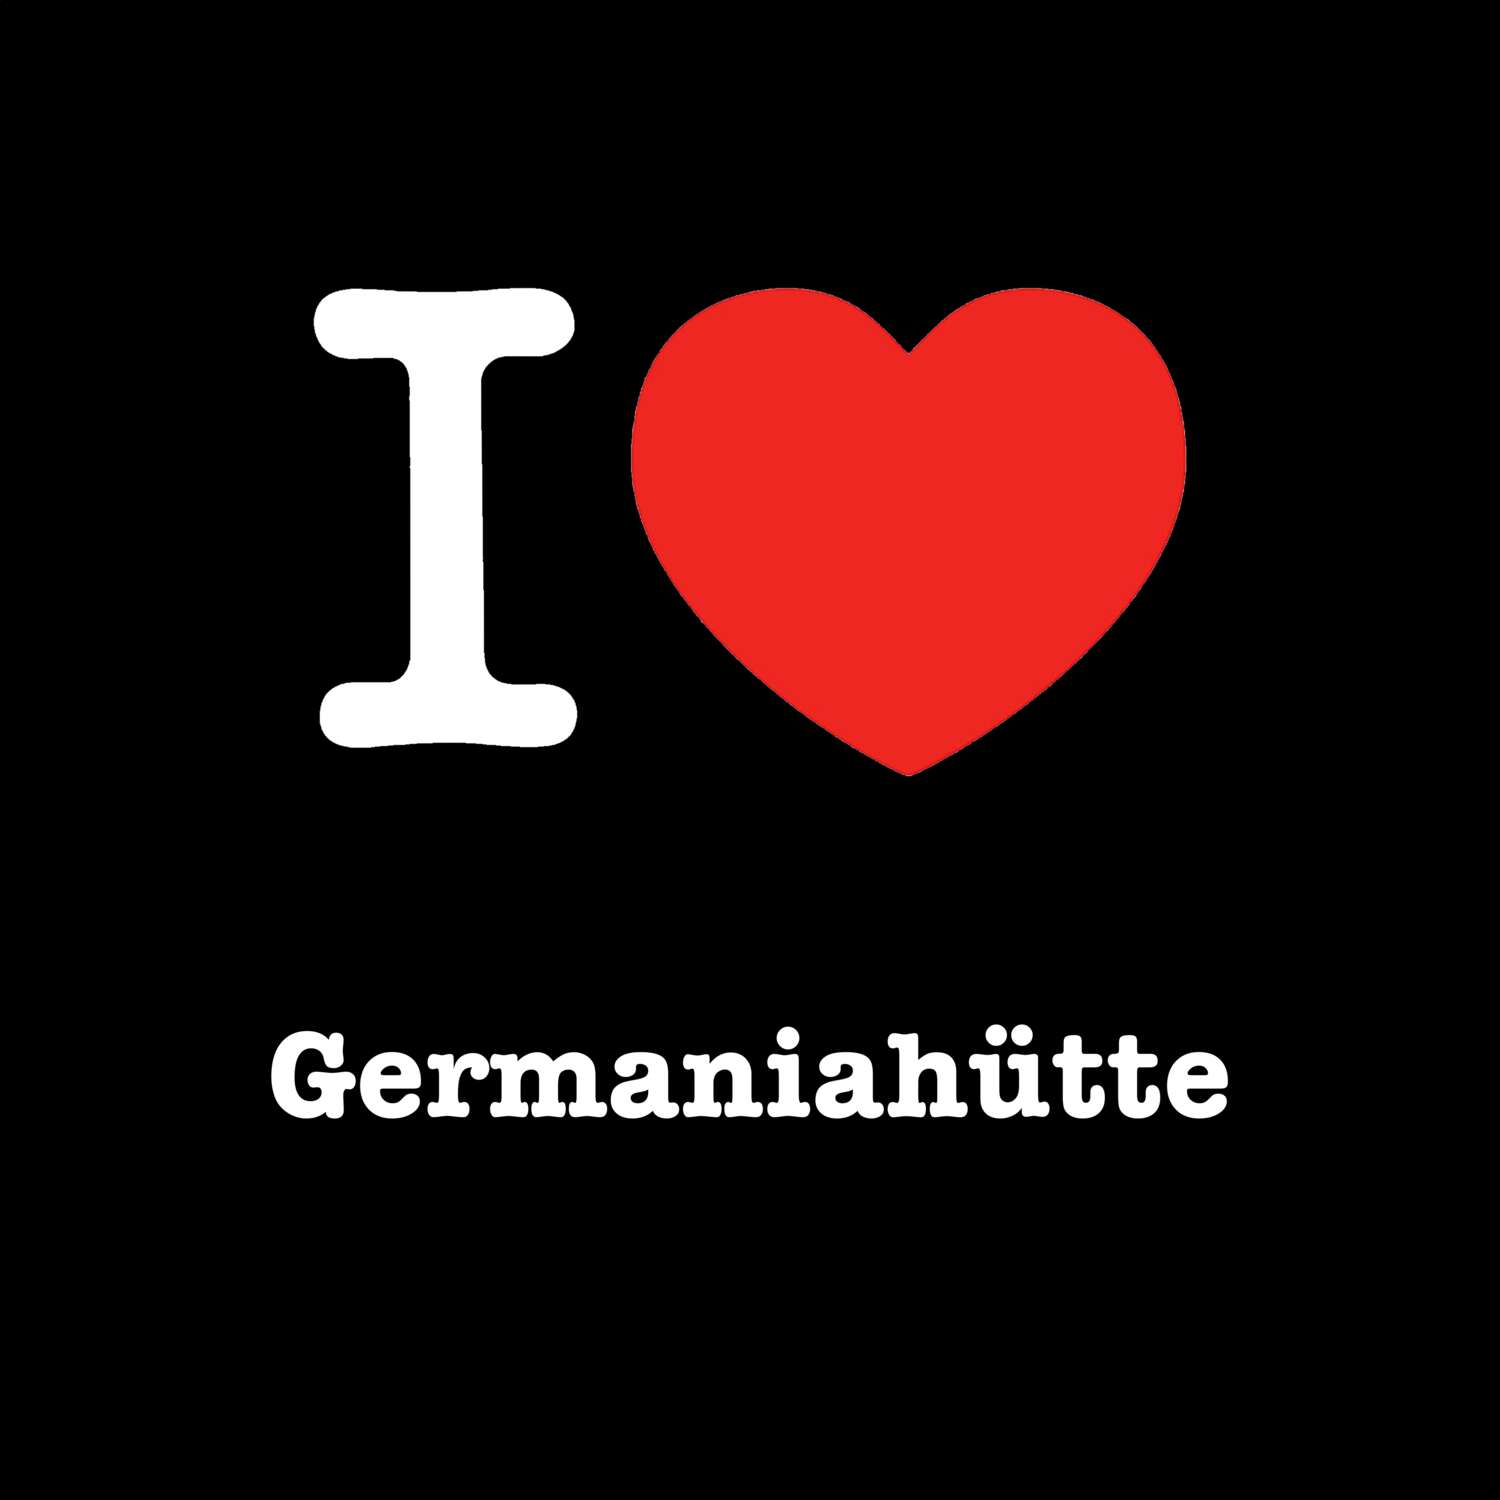 Germaniahütte T-Shirt »I love«